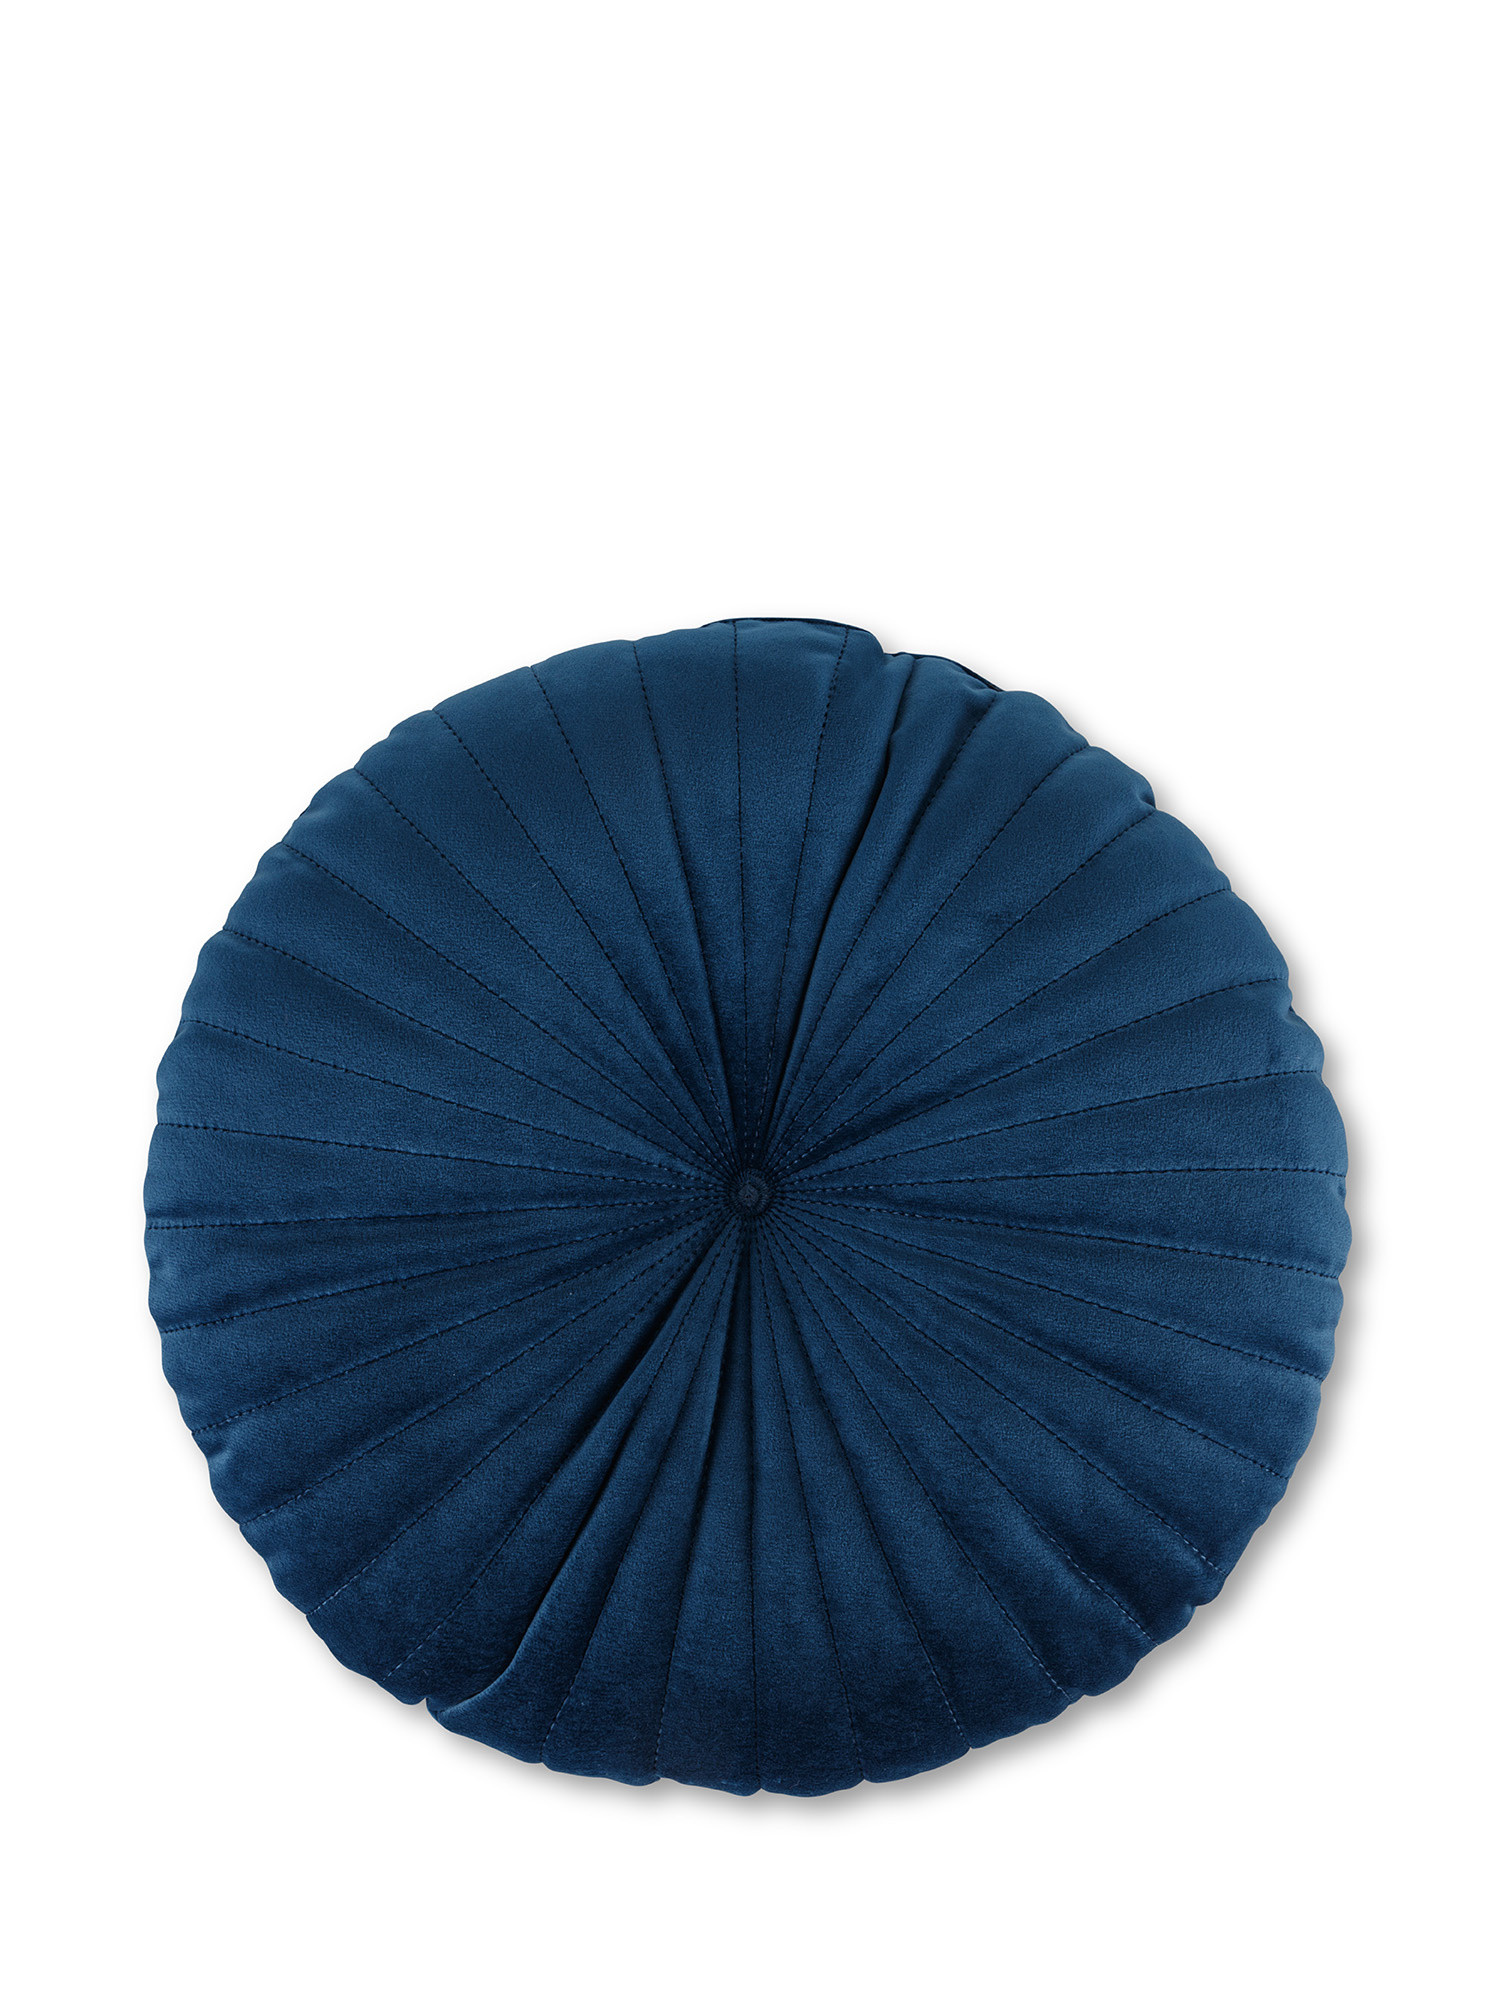 Cuscino rotondo in velluto, Blu scuro, large image number 0